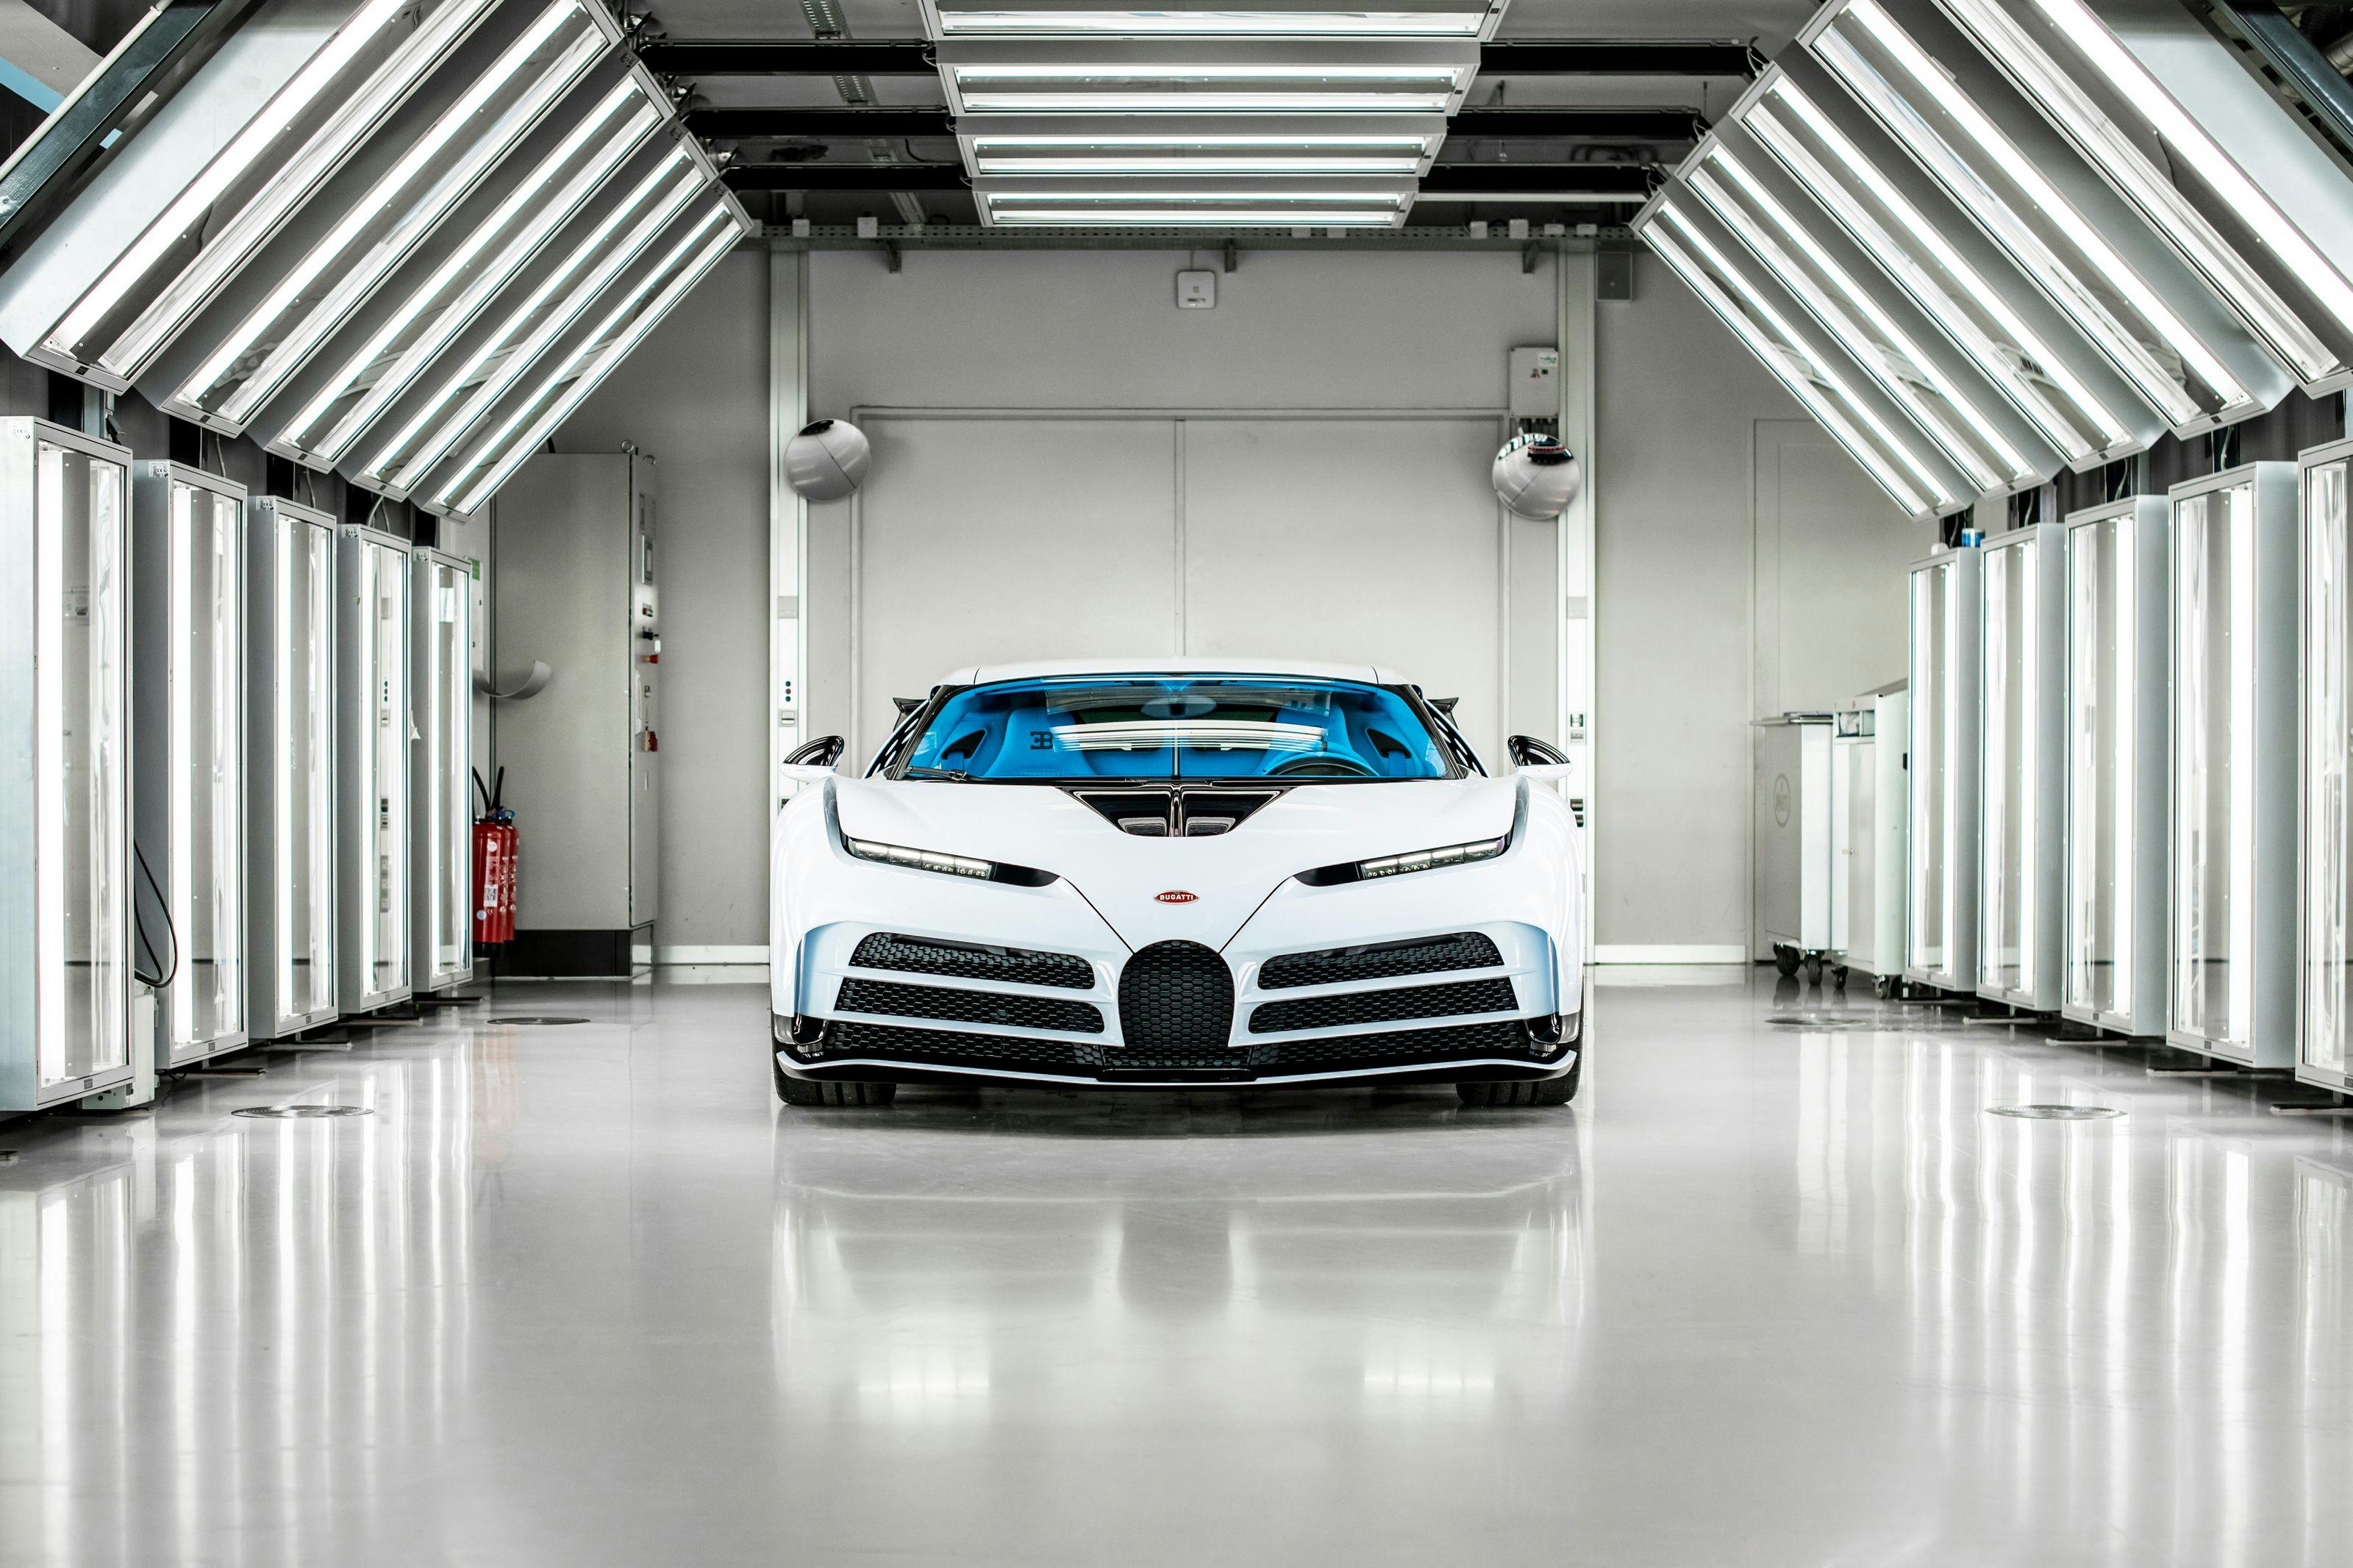 Bugatti delivers the tenth – and final – Centodieci hyper sports car